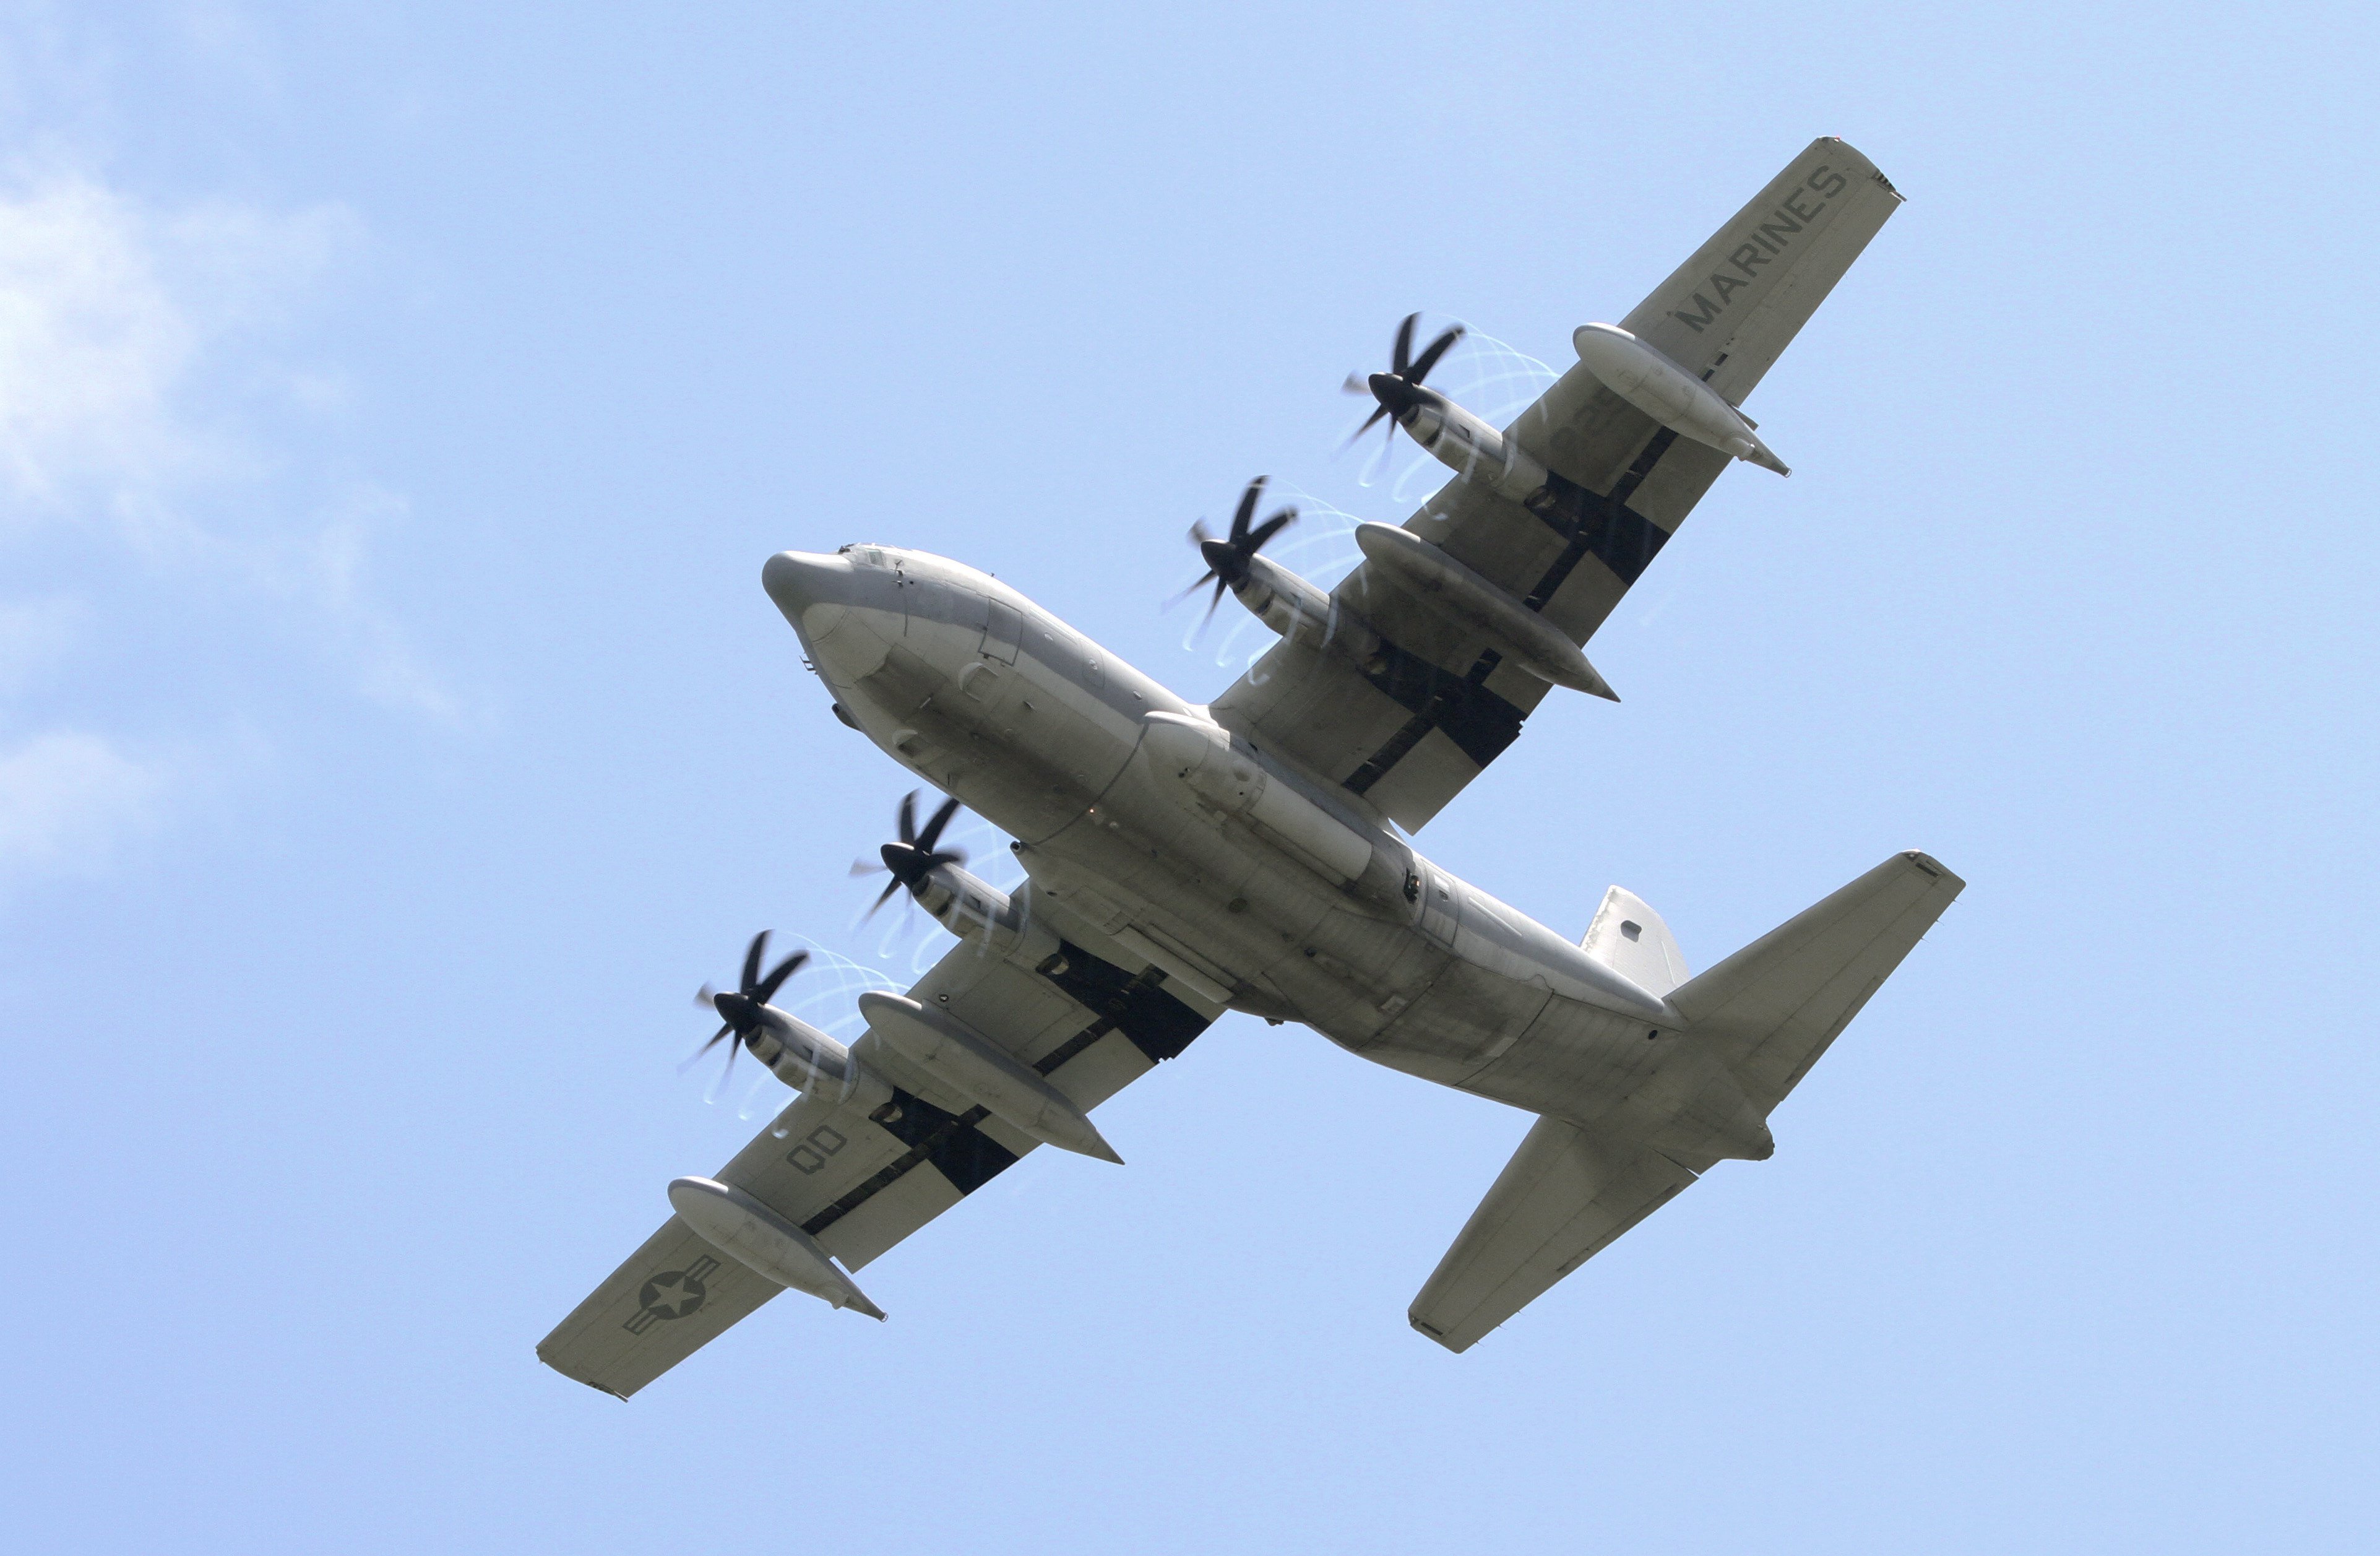 Military Plane Crash: KC-130 Aircraft Has History of Use During War